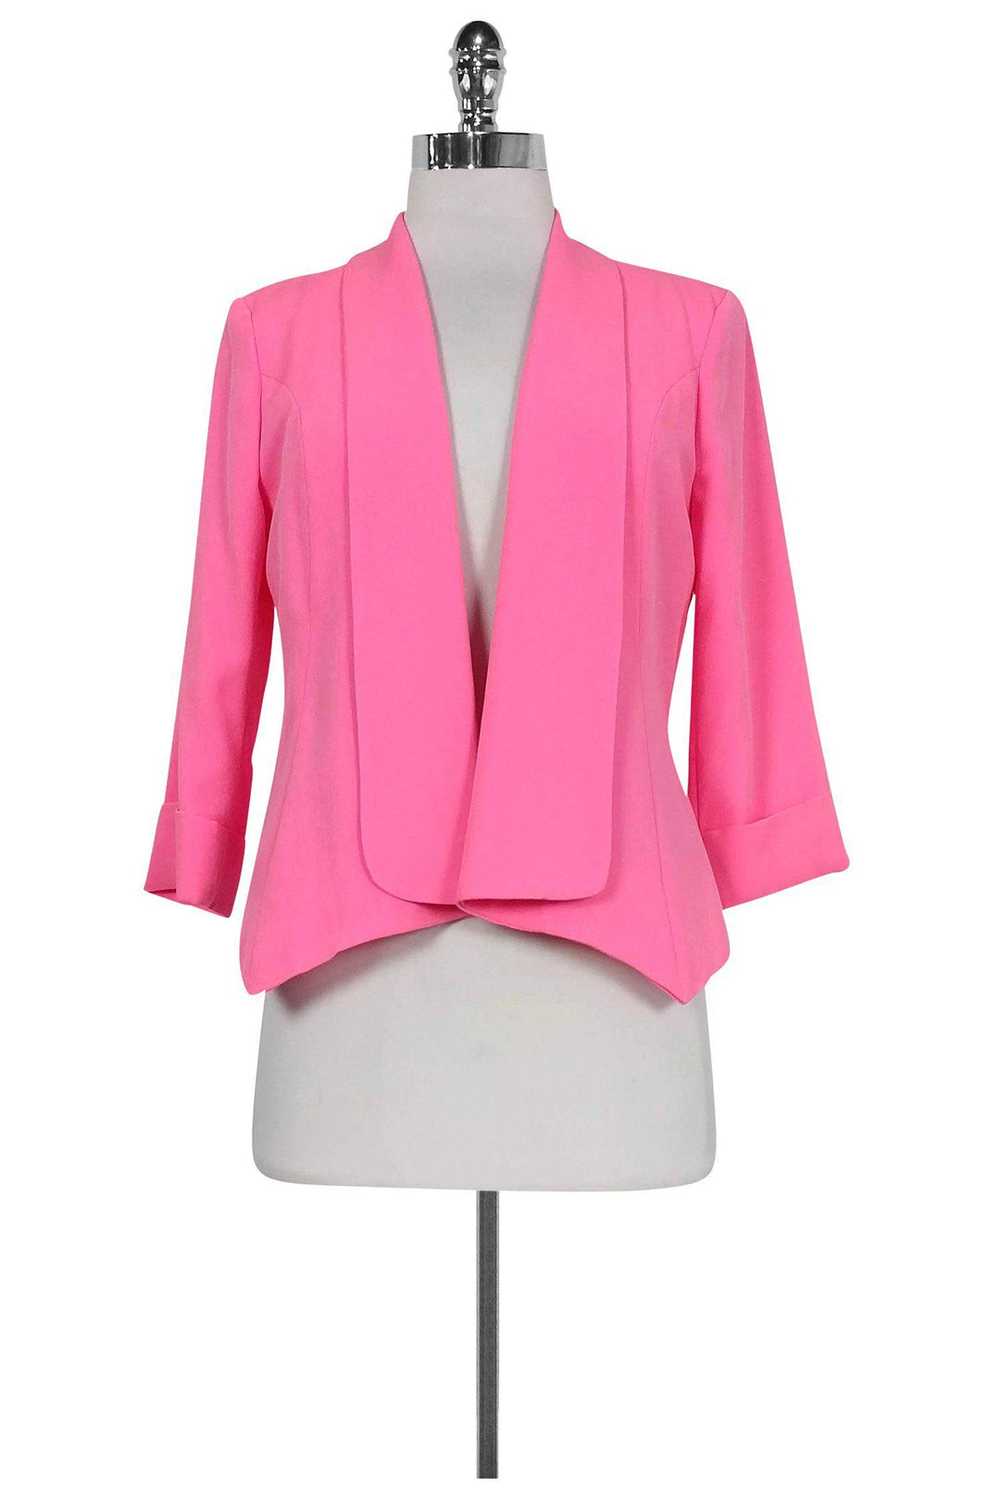 Alberto Makali - Neon Pink Asymmetrical Jacket Sz… - image 1